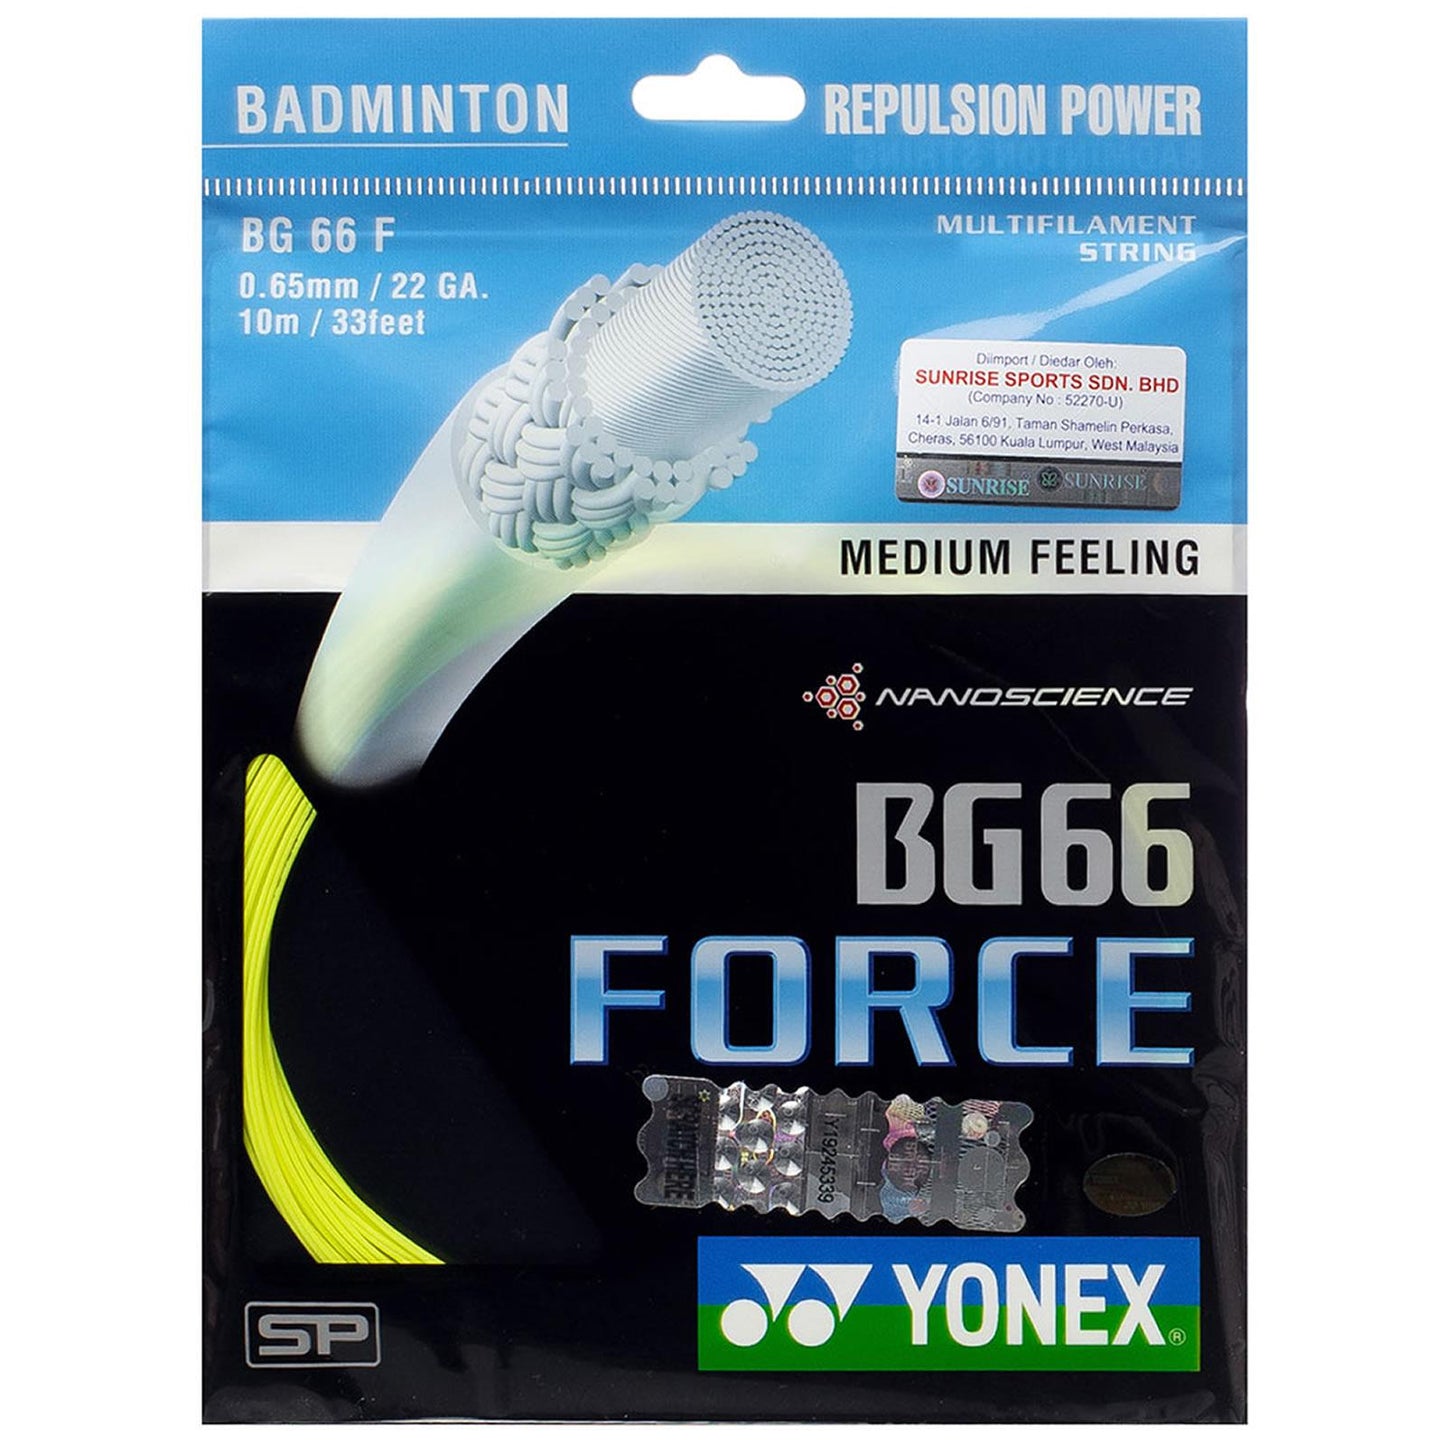 Yonex BG 66 Force Badminton String - 0.65mm Yellow 10m Packet